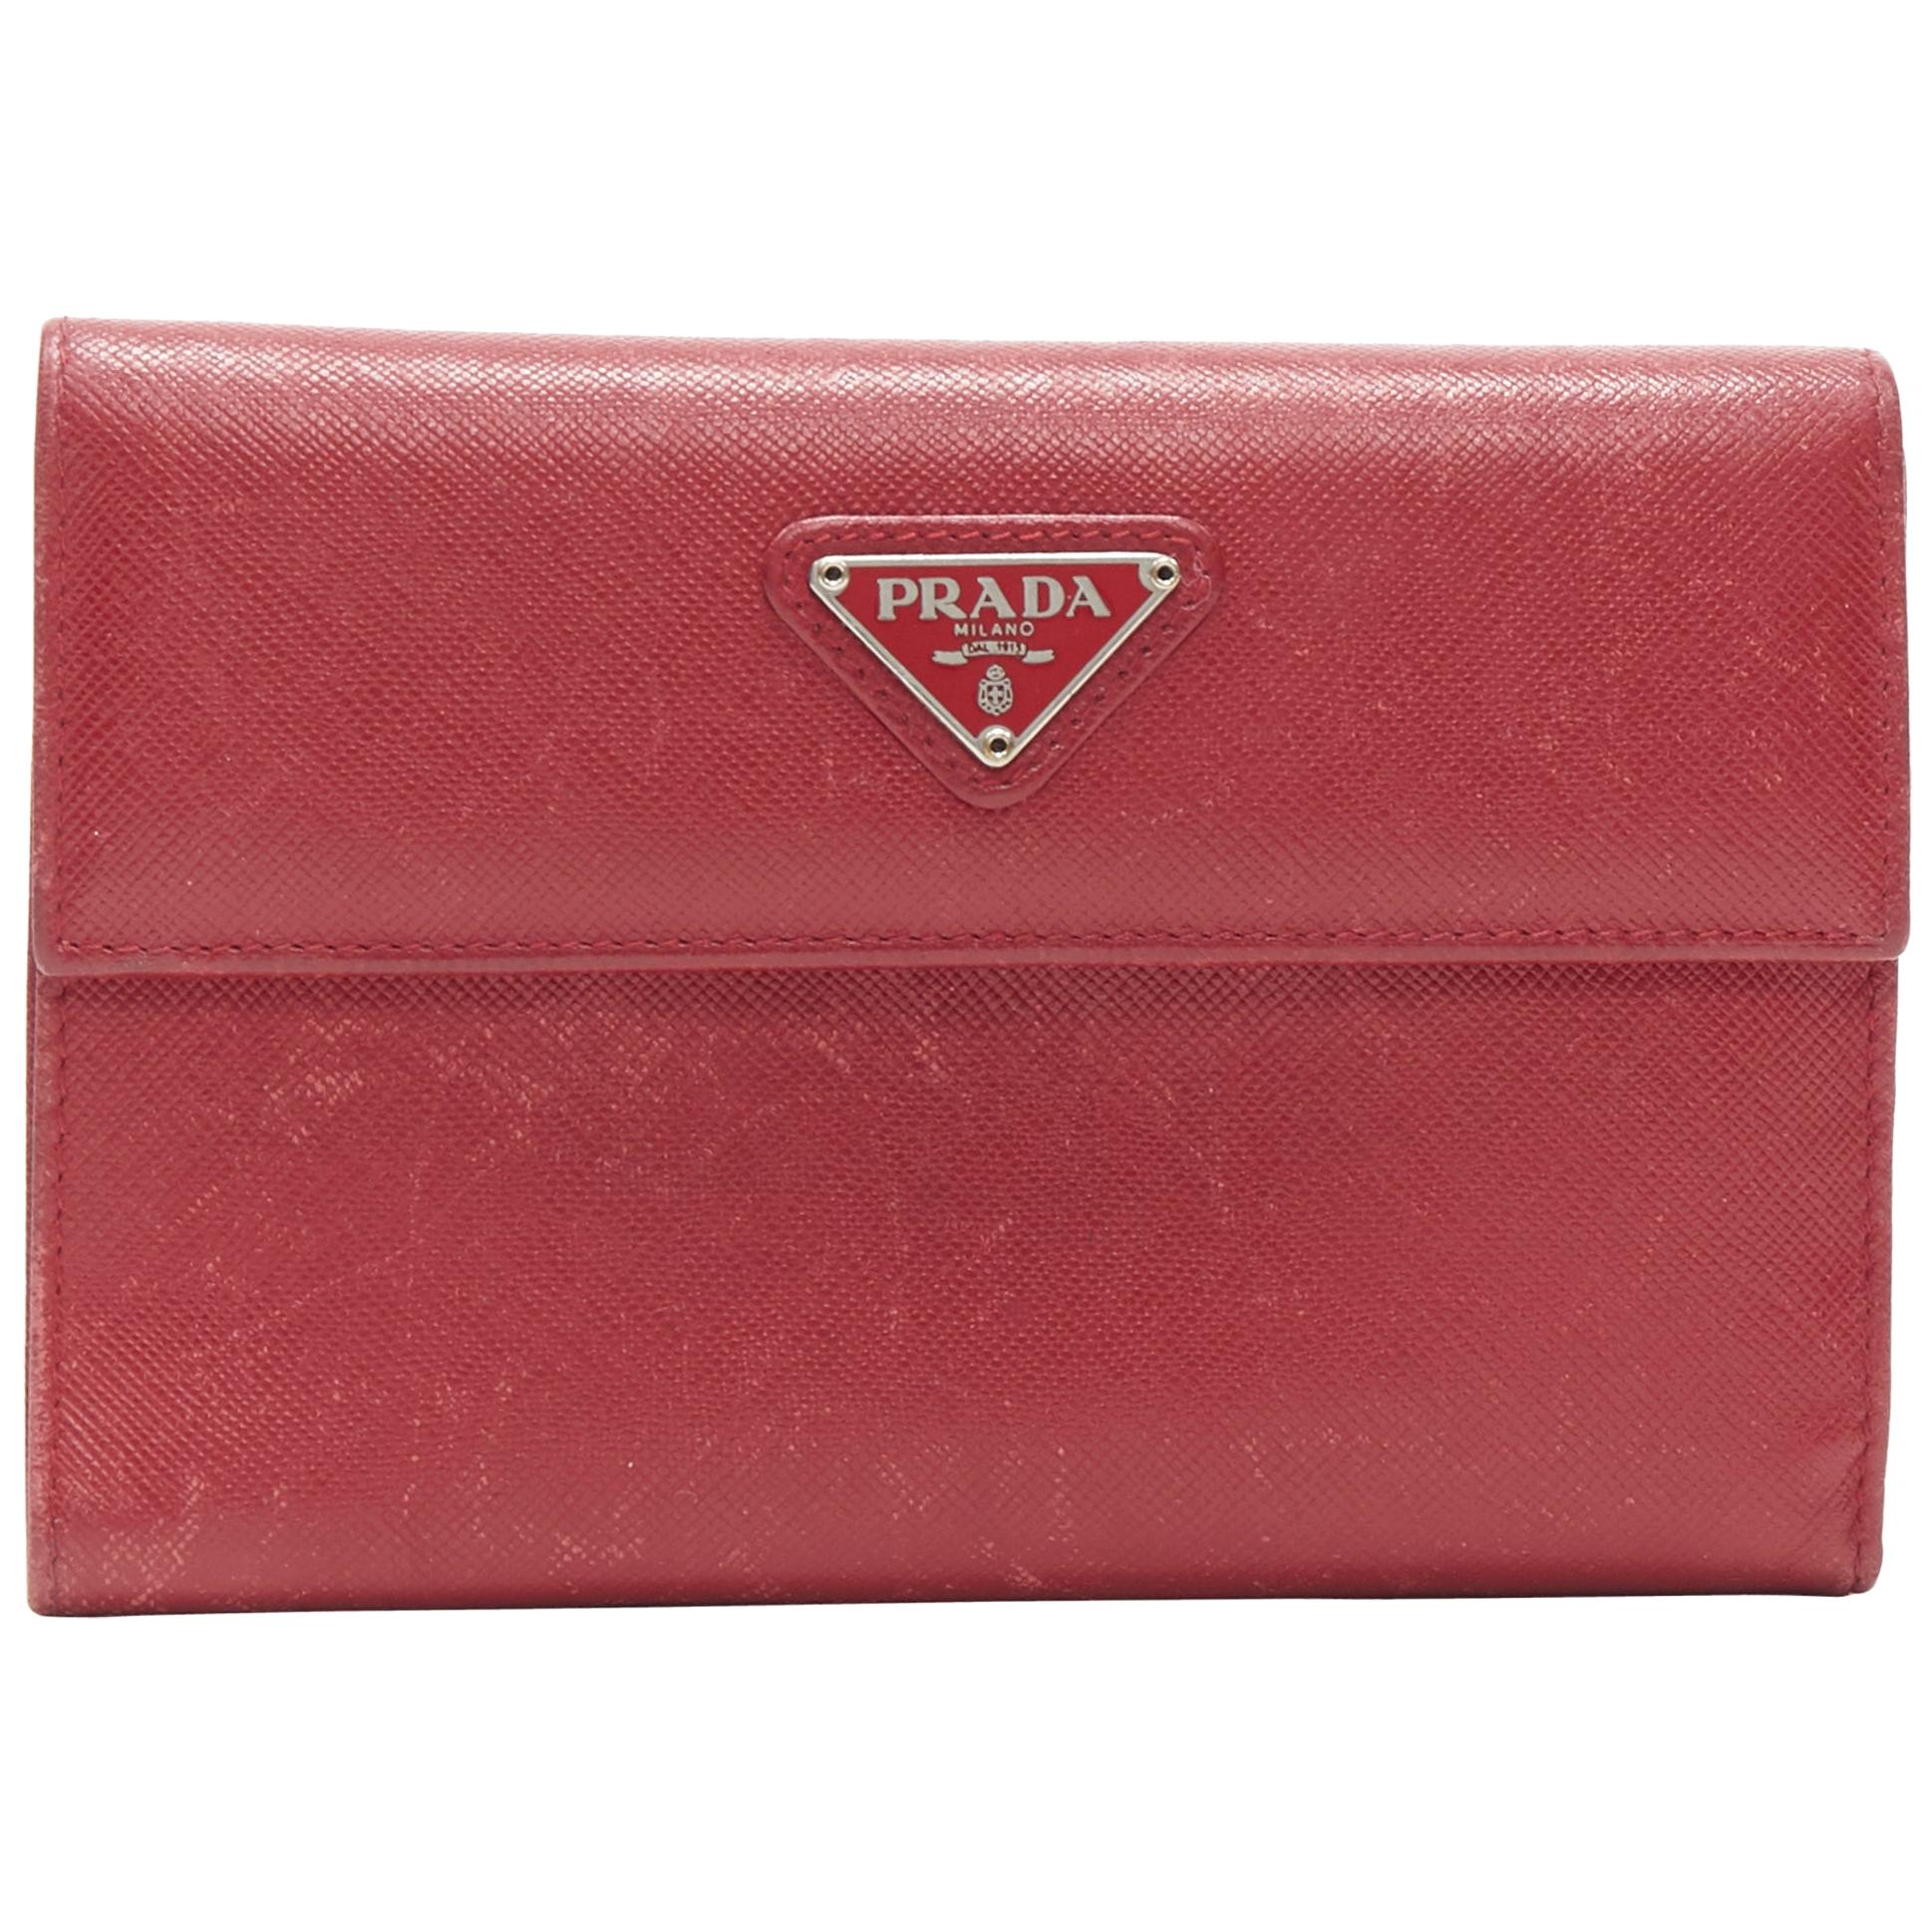 vintage PRADA red saffiano leather triangular plaque flap wallet